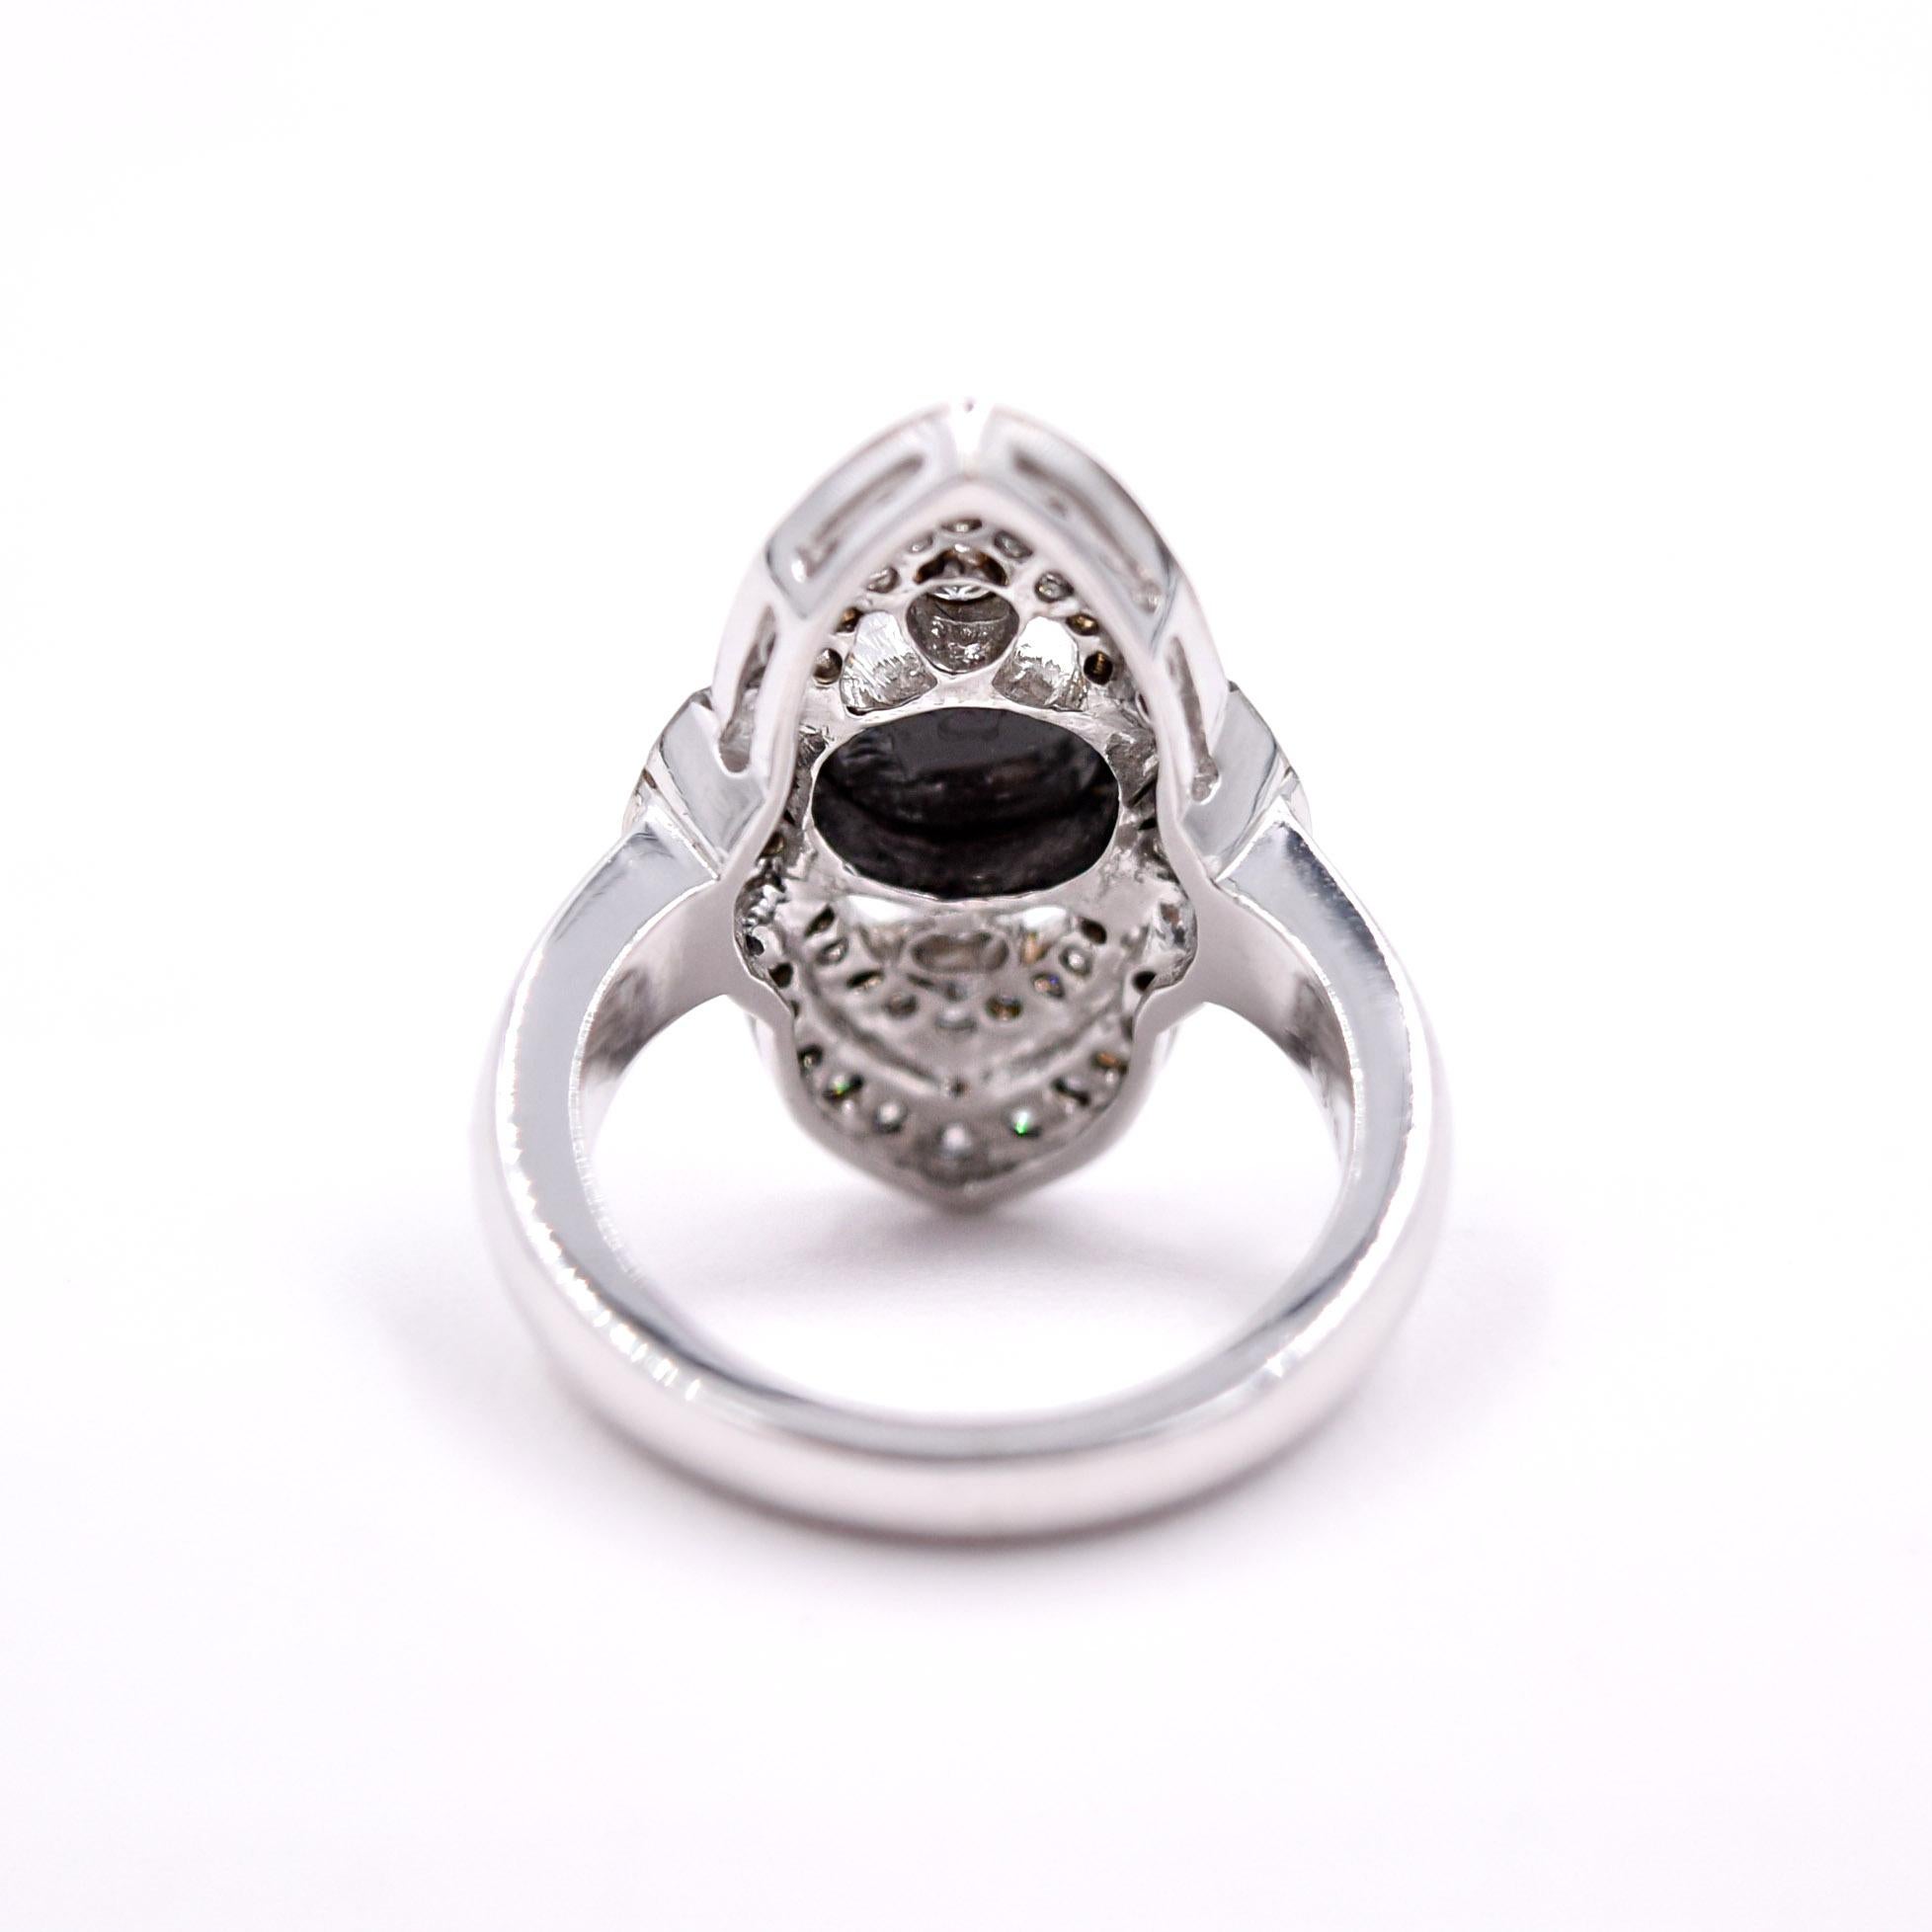 Rose Cut 3.32 Carat Black Diamond Cocktail Ring in 18 Karat White Gold and Rhodium For Sale